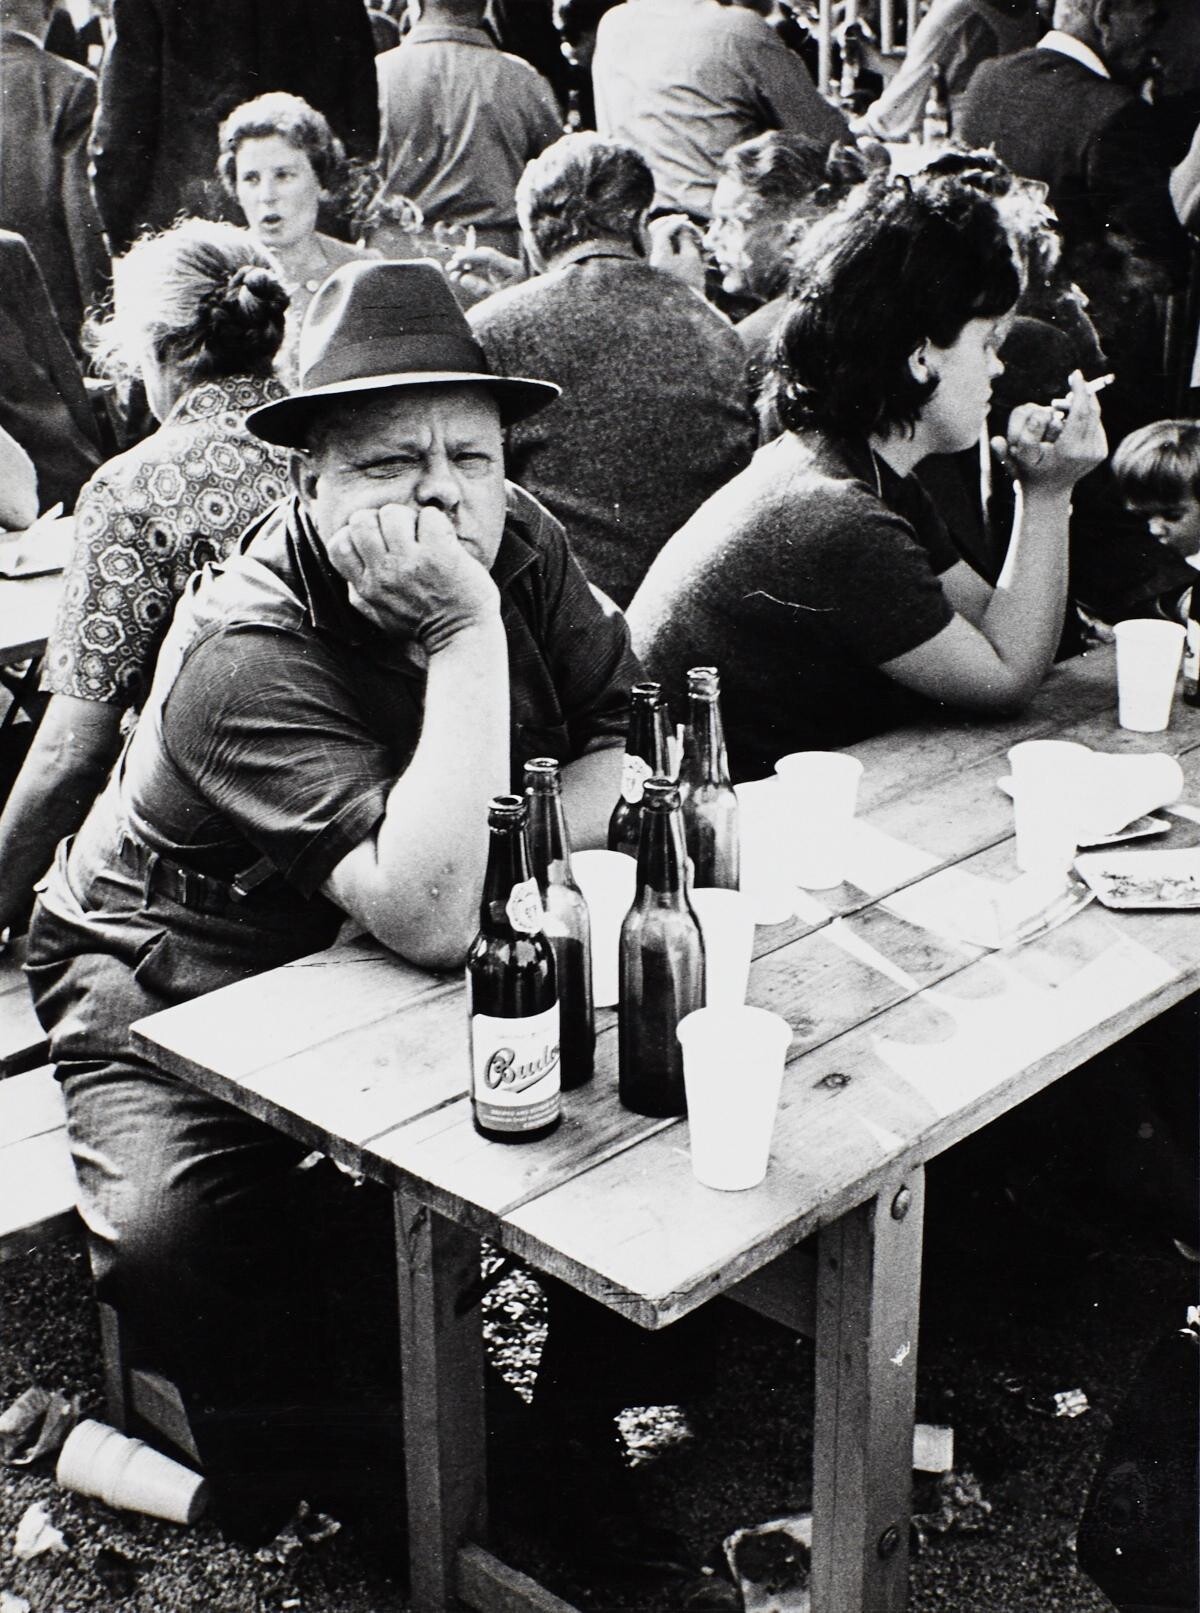 Дегустация на ярмарке, 1962. Фотограф Франц Хубманн